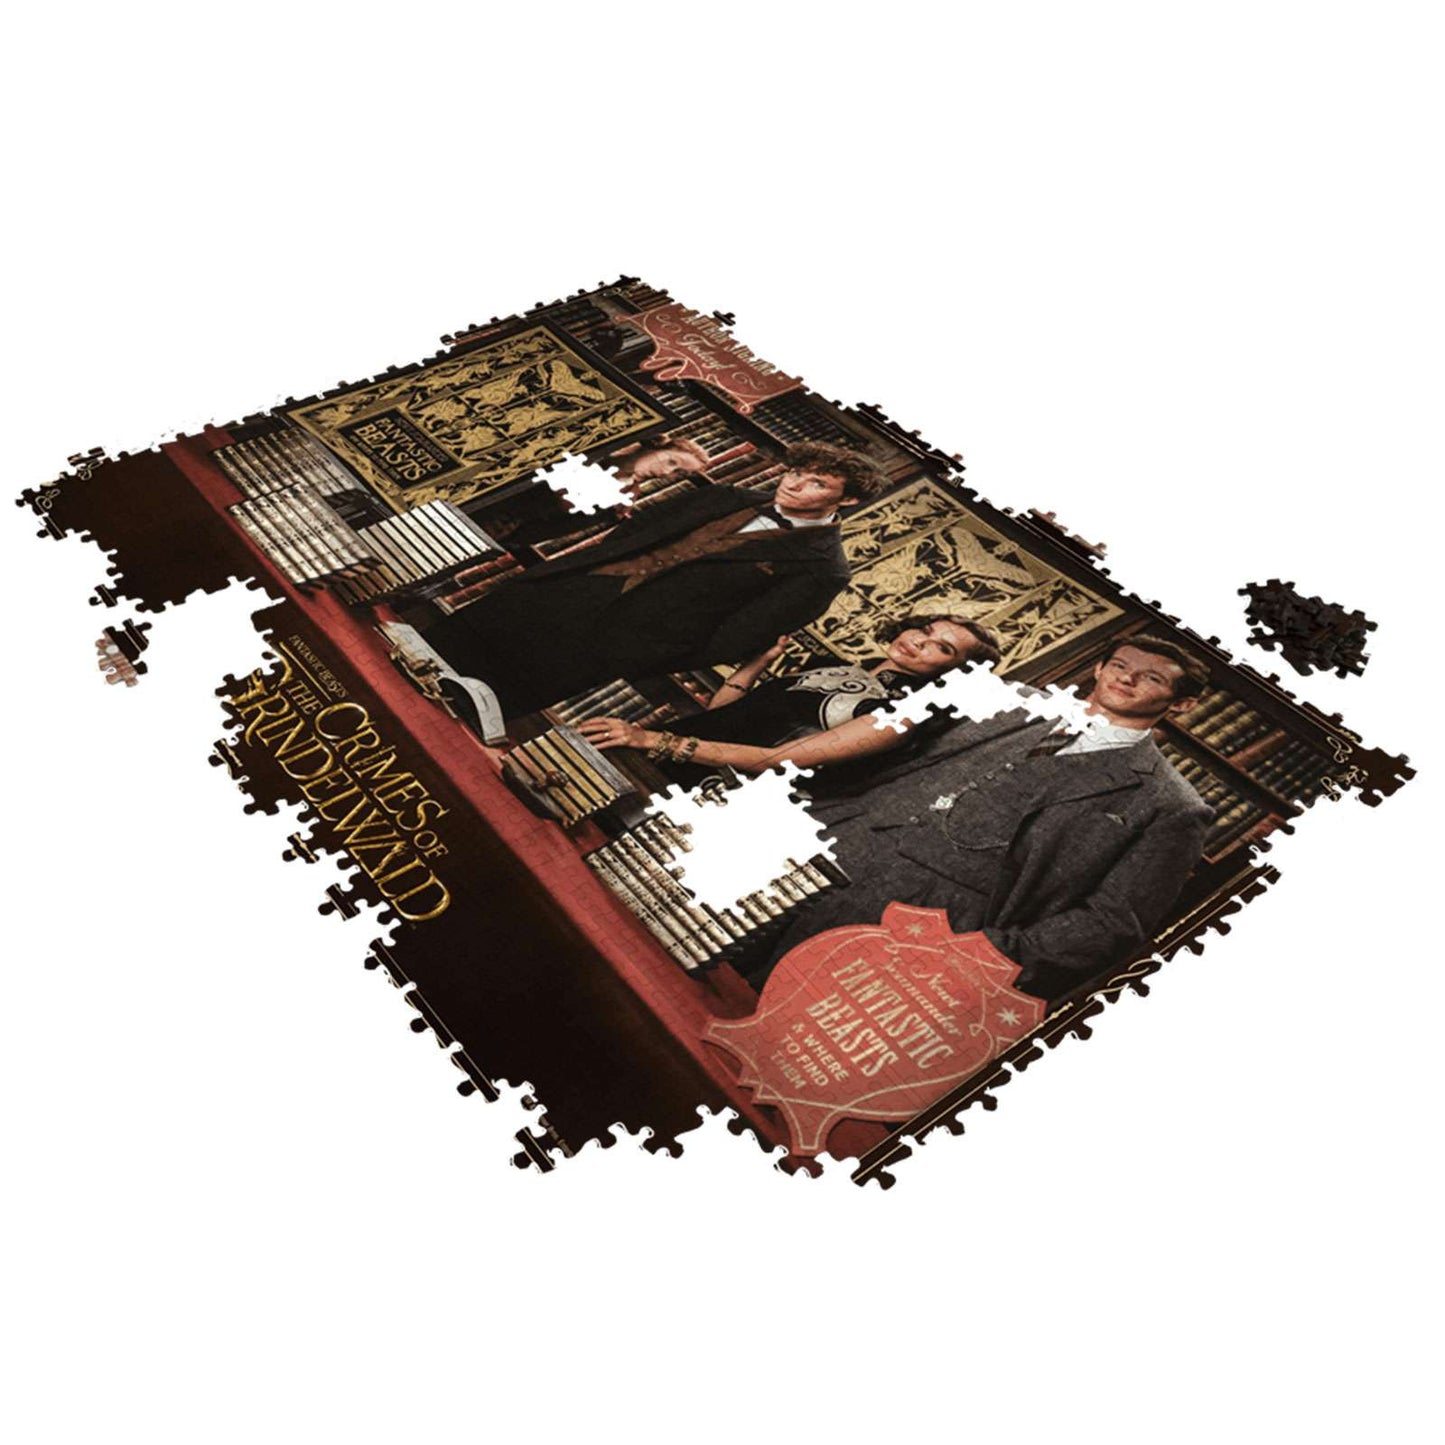 Fantastic Beasts Puzzle - 1000 Pieces